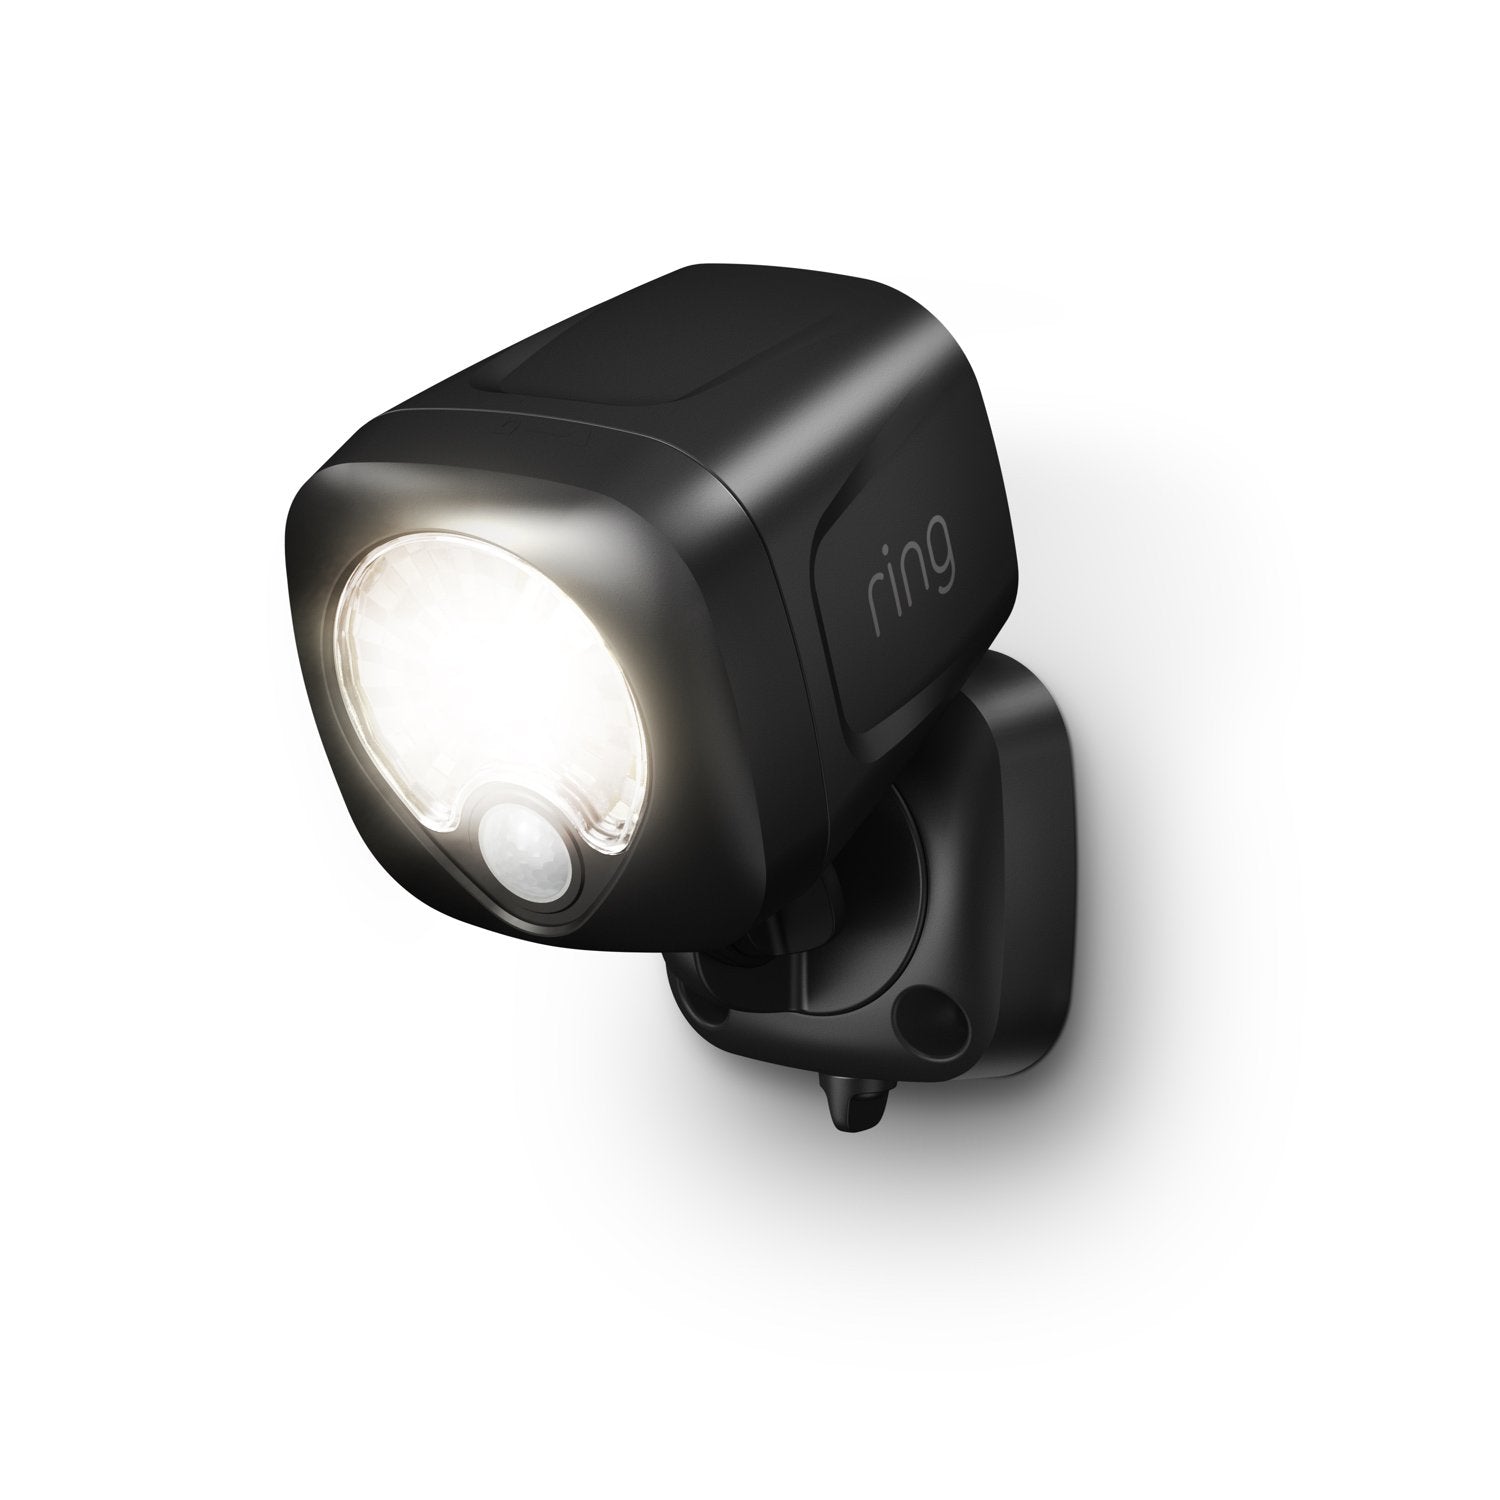 Smart Lighting Spotlight Battery - Black:Smart Lighting Spotlight Battery